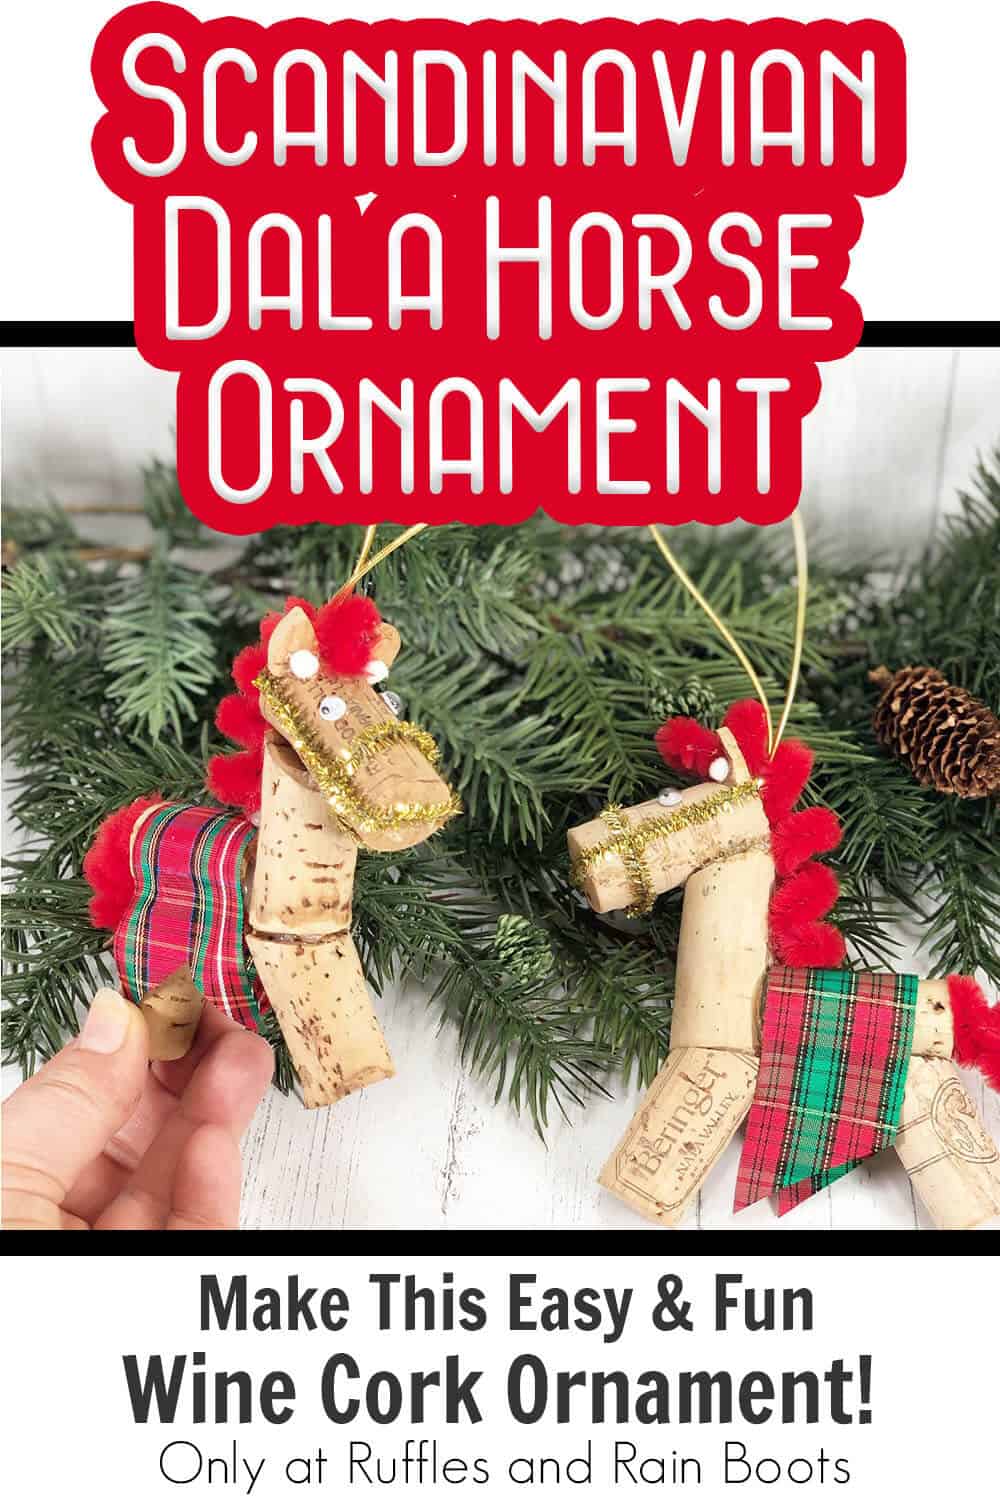 scandinavian dala horse christmas ornament with text which reads scandinavian dala horse ornament make this easy & fun wine cork ornament!